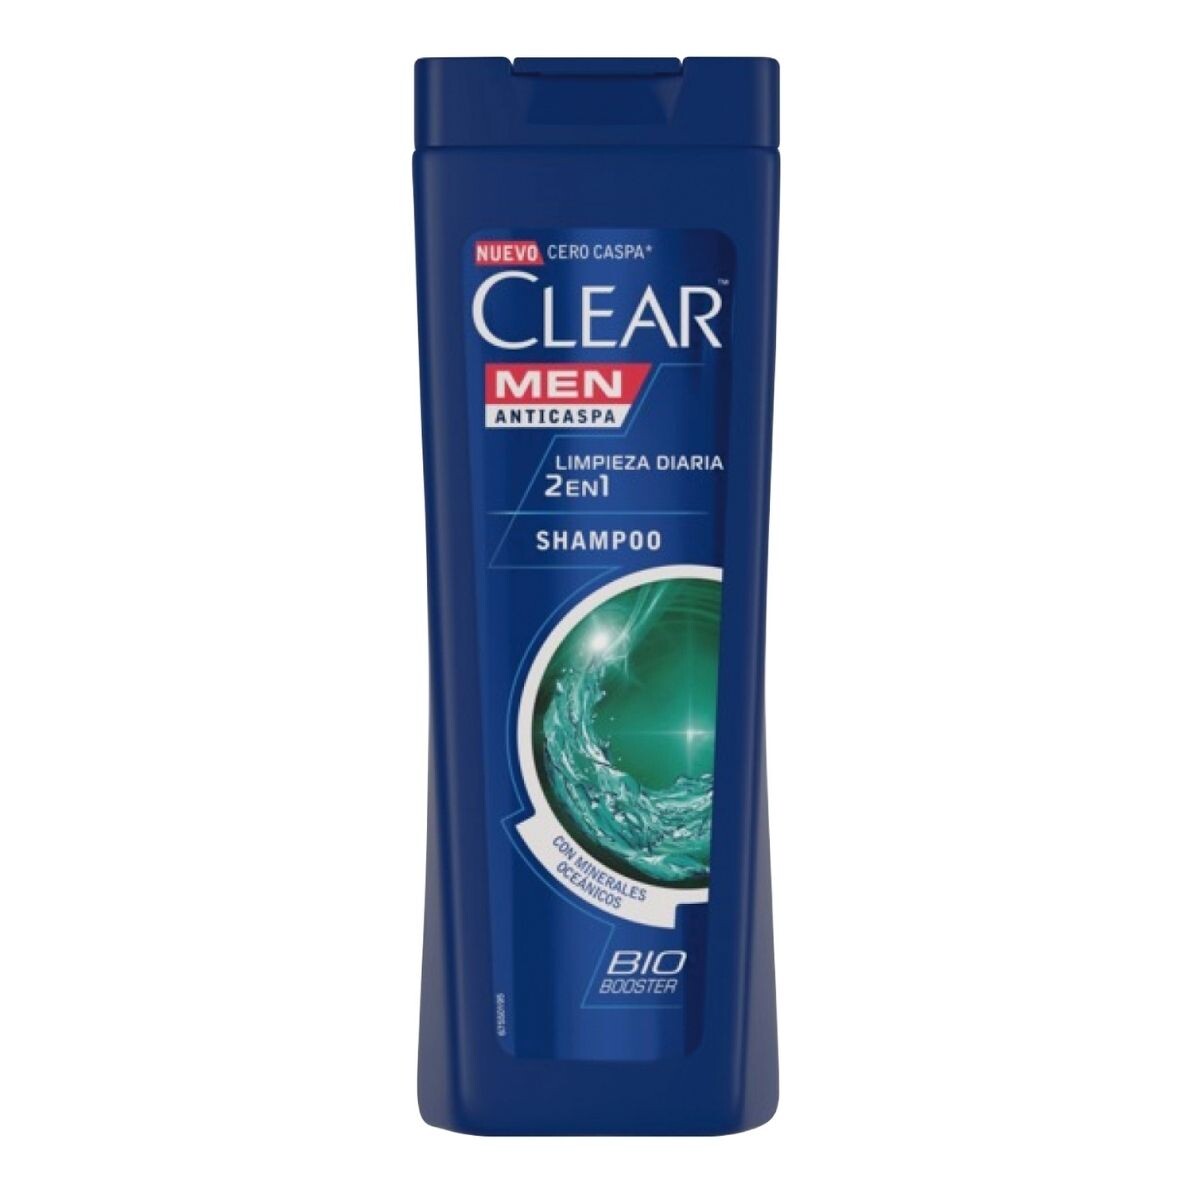 Shampoo Clear Anticaspa Men 2EN1 - 400 ML 